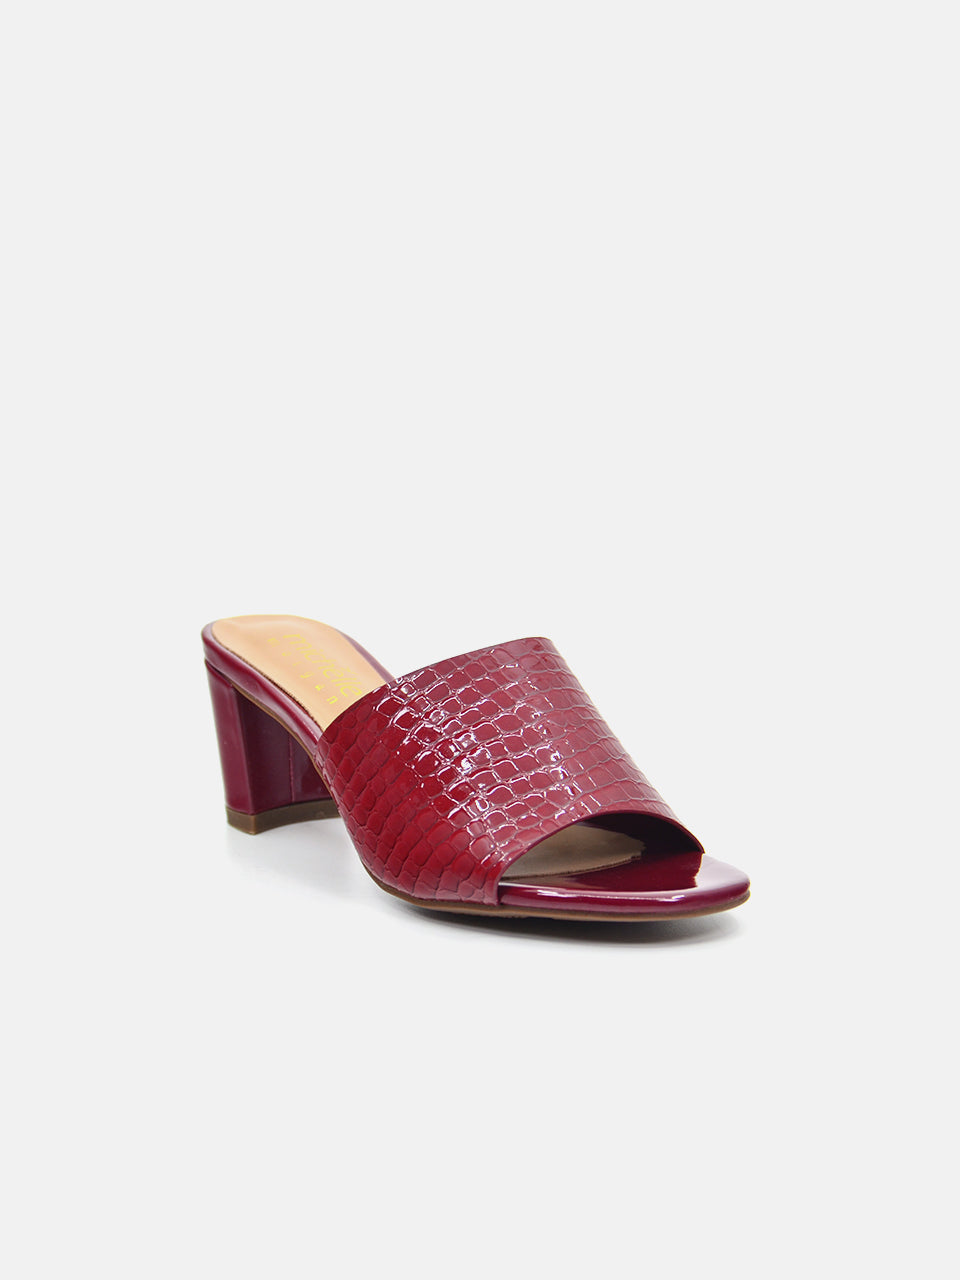 Michelle Morgan 914RJ191 Women's Heeled Sandals #color_Maroon